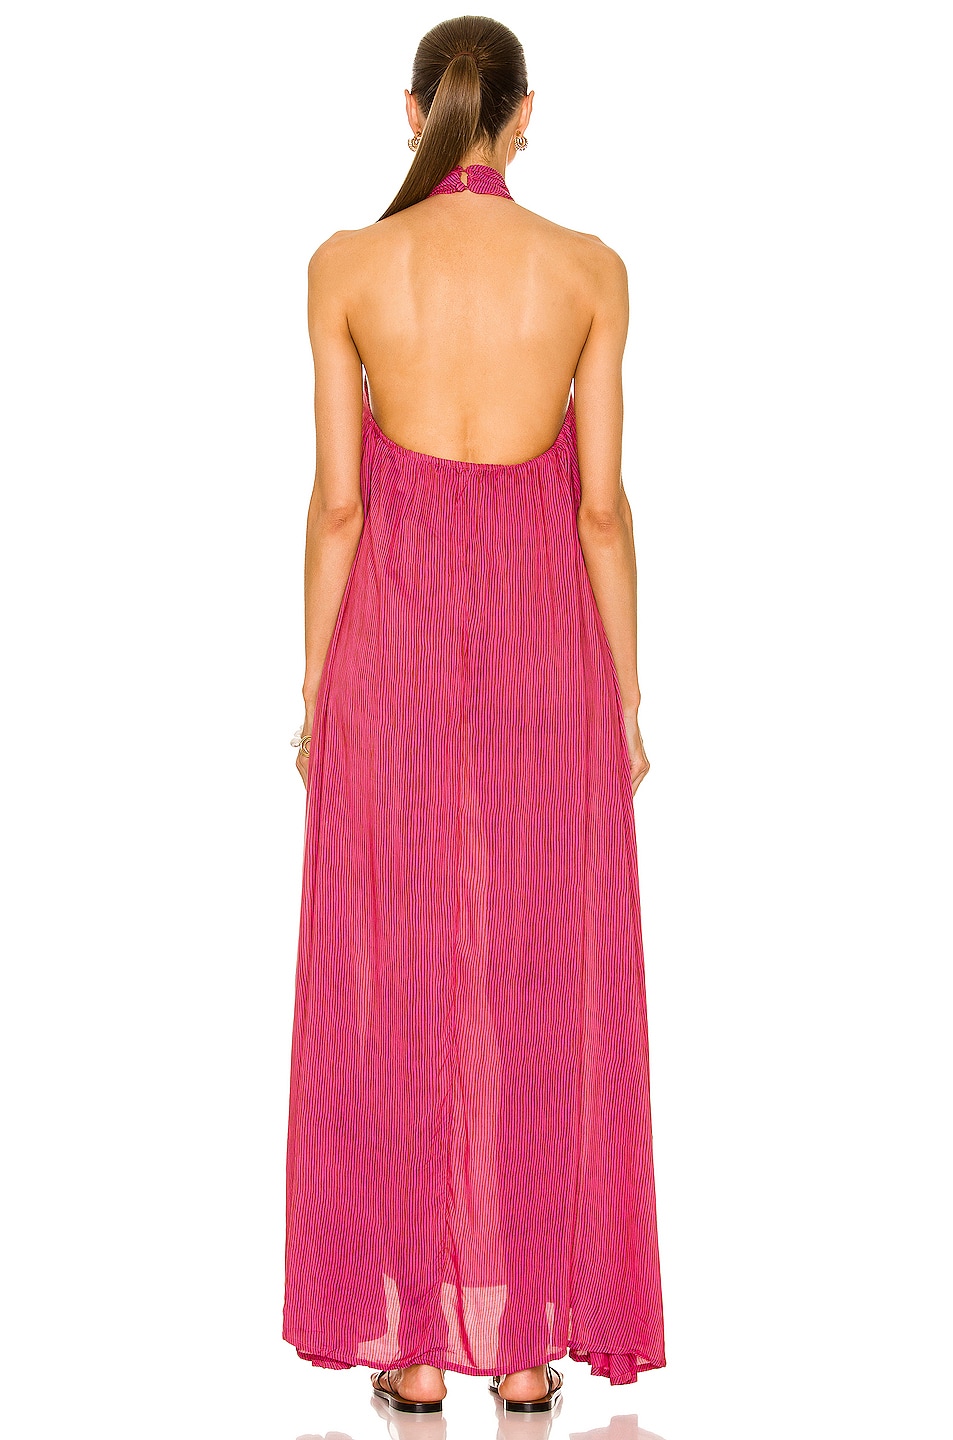 Natalie Martin Astrid Dress in Wobbly Stripe Puglia Pink | FWRD